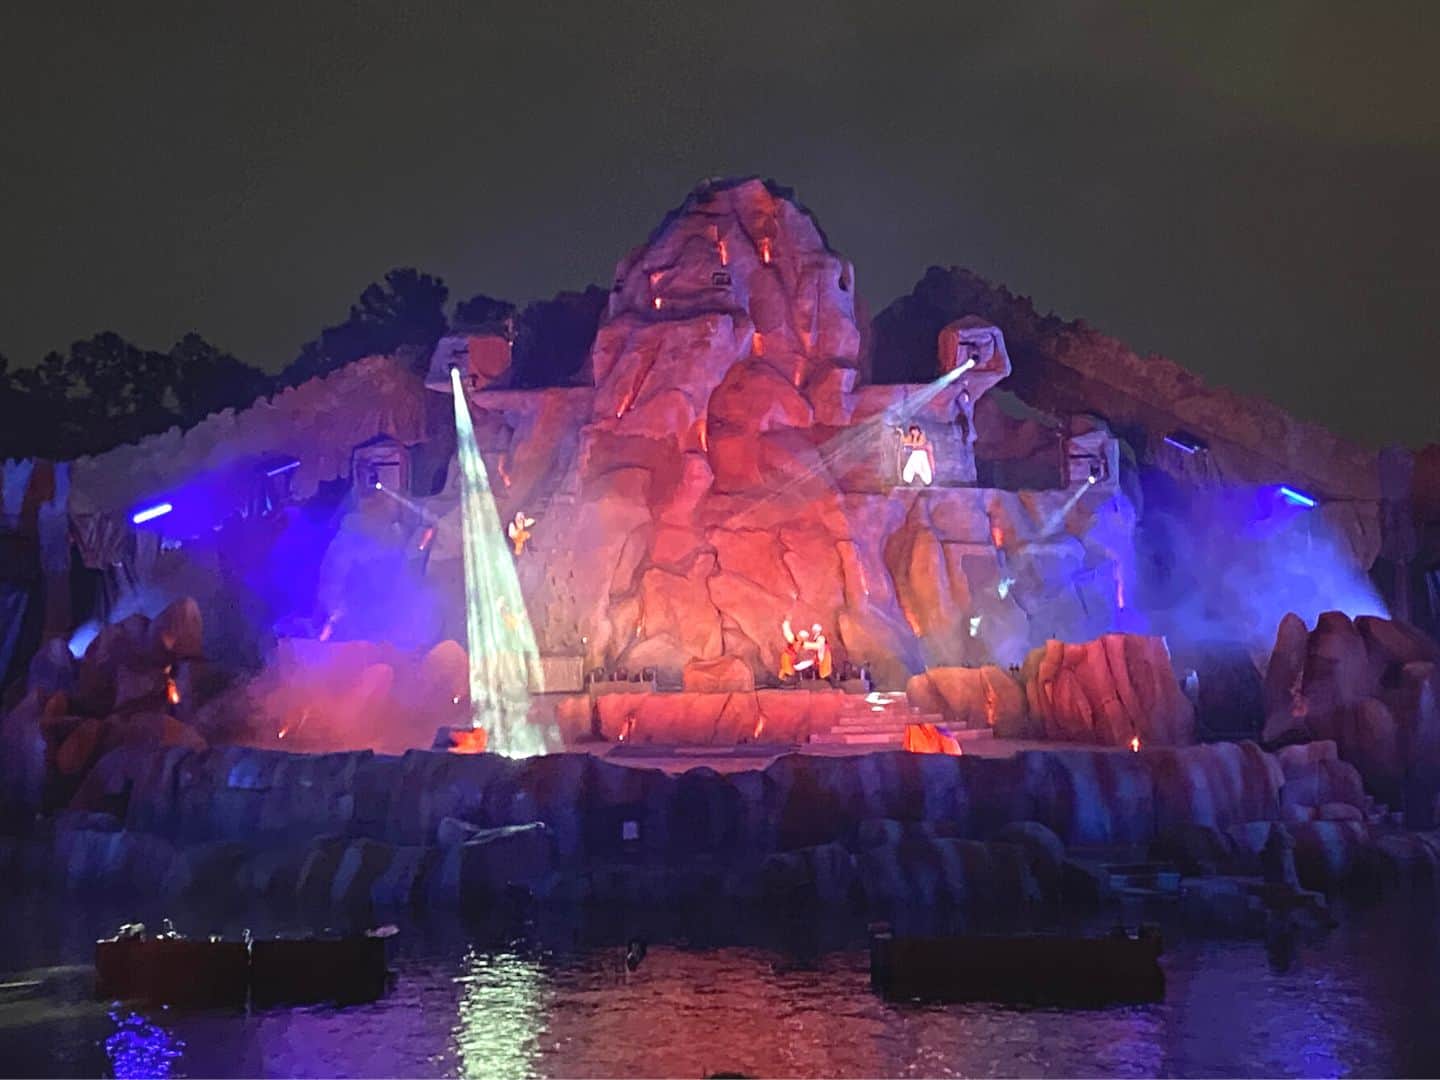 New Aladdin Scene in Fantasmic nighttime show at Walt Disney World - Dani Meyering